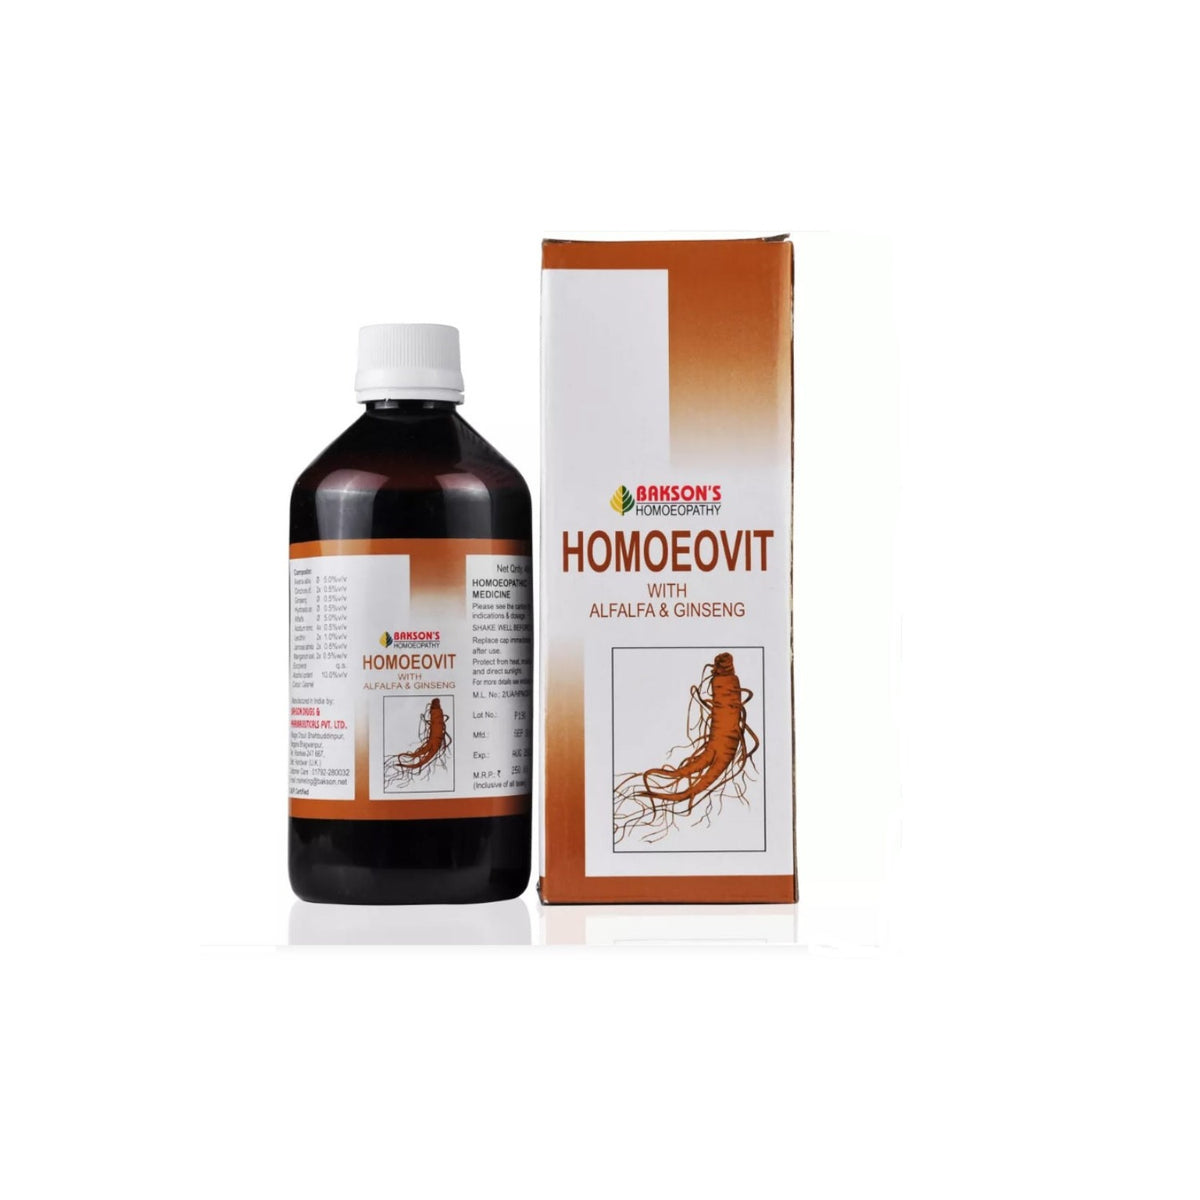 Bakson's Homoeopathy Homoeovit With Alfalfa & Ginseng Health Restorative Tonic Syrup